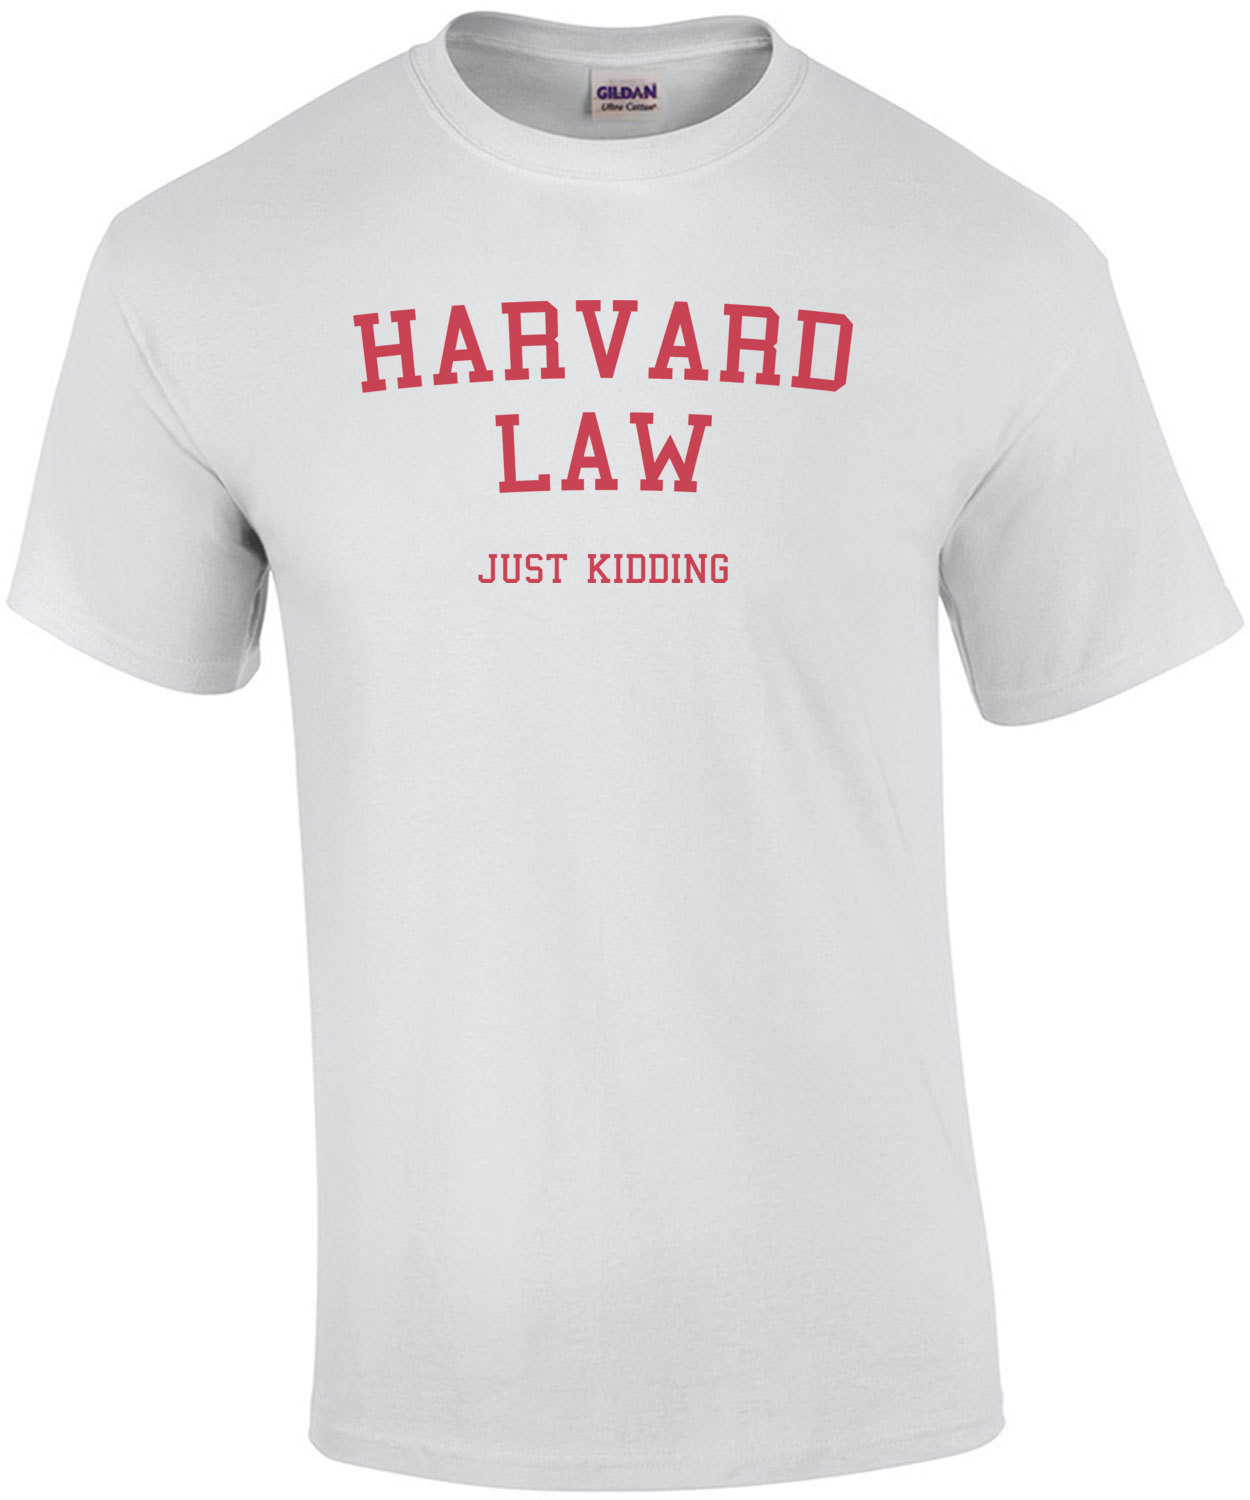 Harvard Law - Just Kidding Kids' Shirt